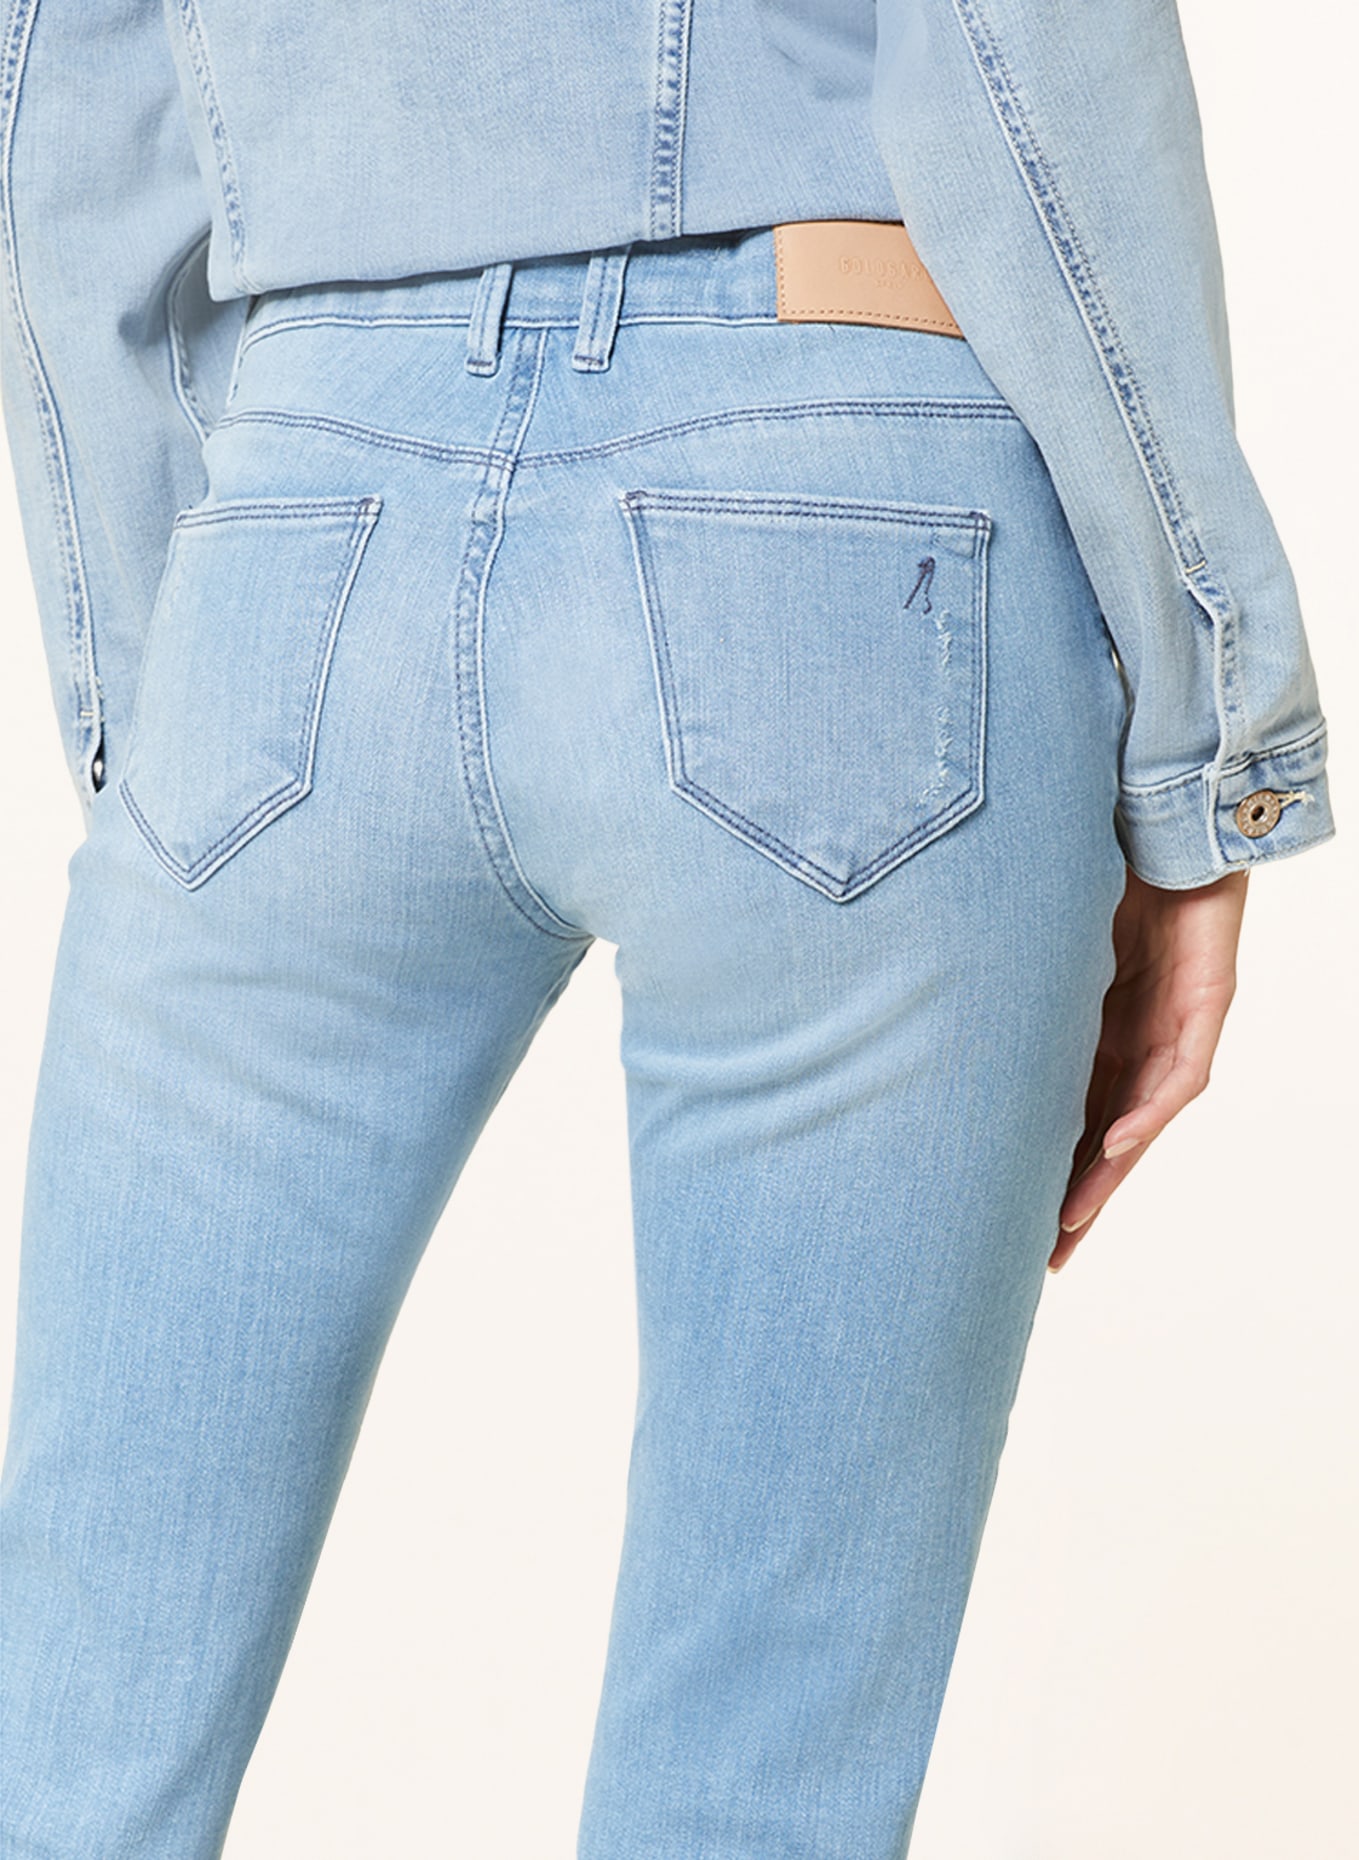 GOLDGARN DENIM Skinny Jeans JUNGBUSCH, Farbe: 1070 light blue (Bild 5)